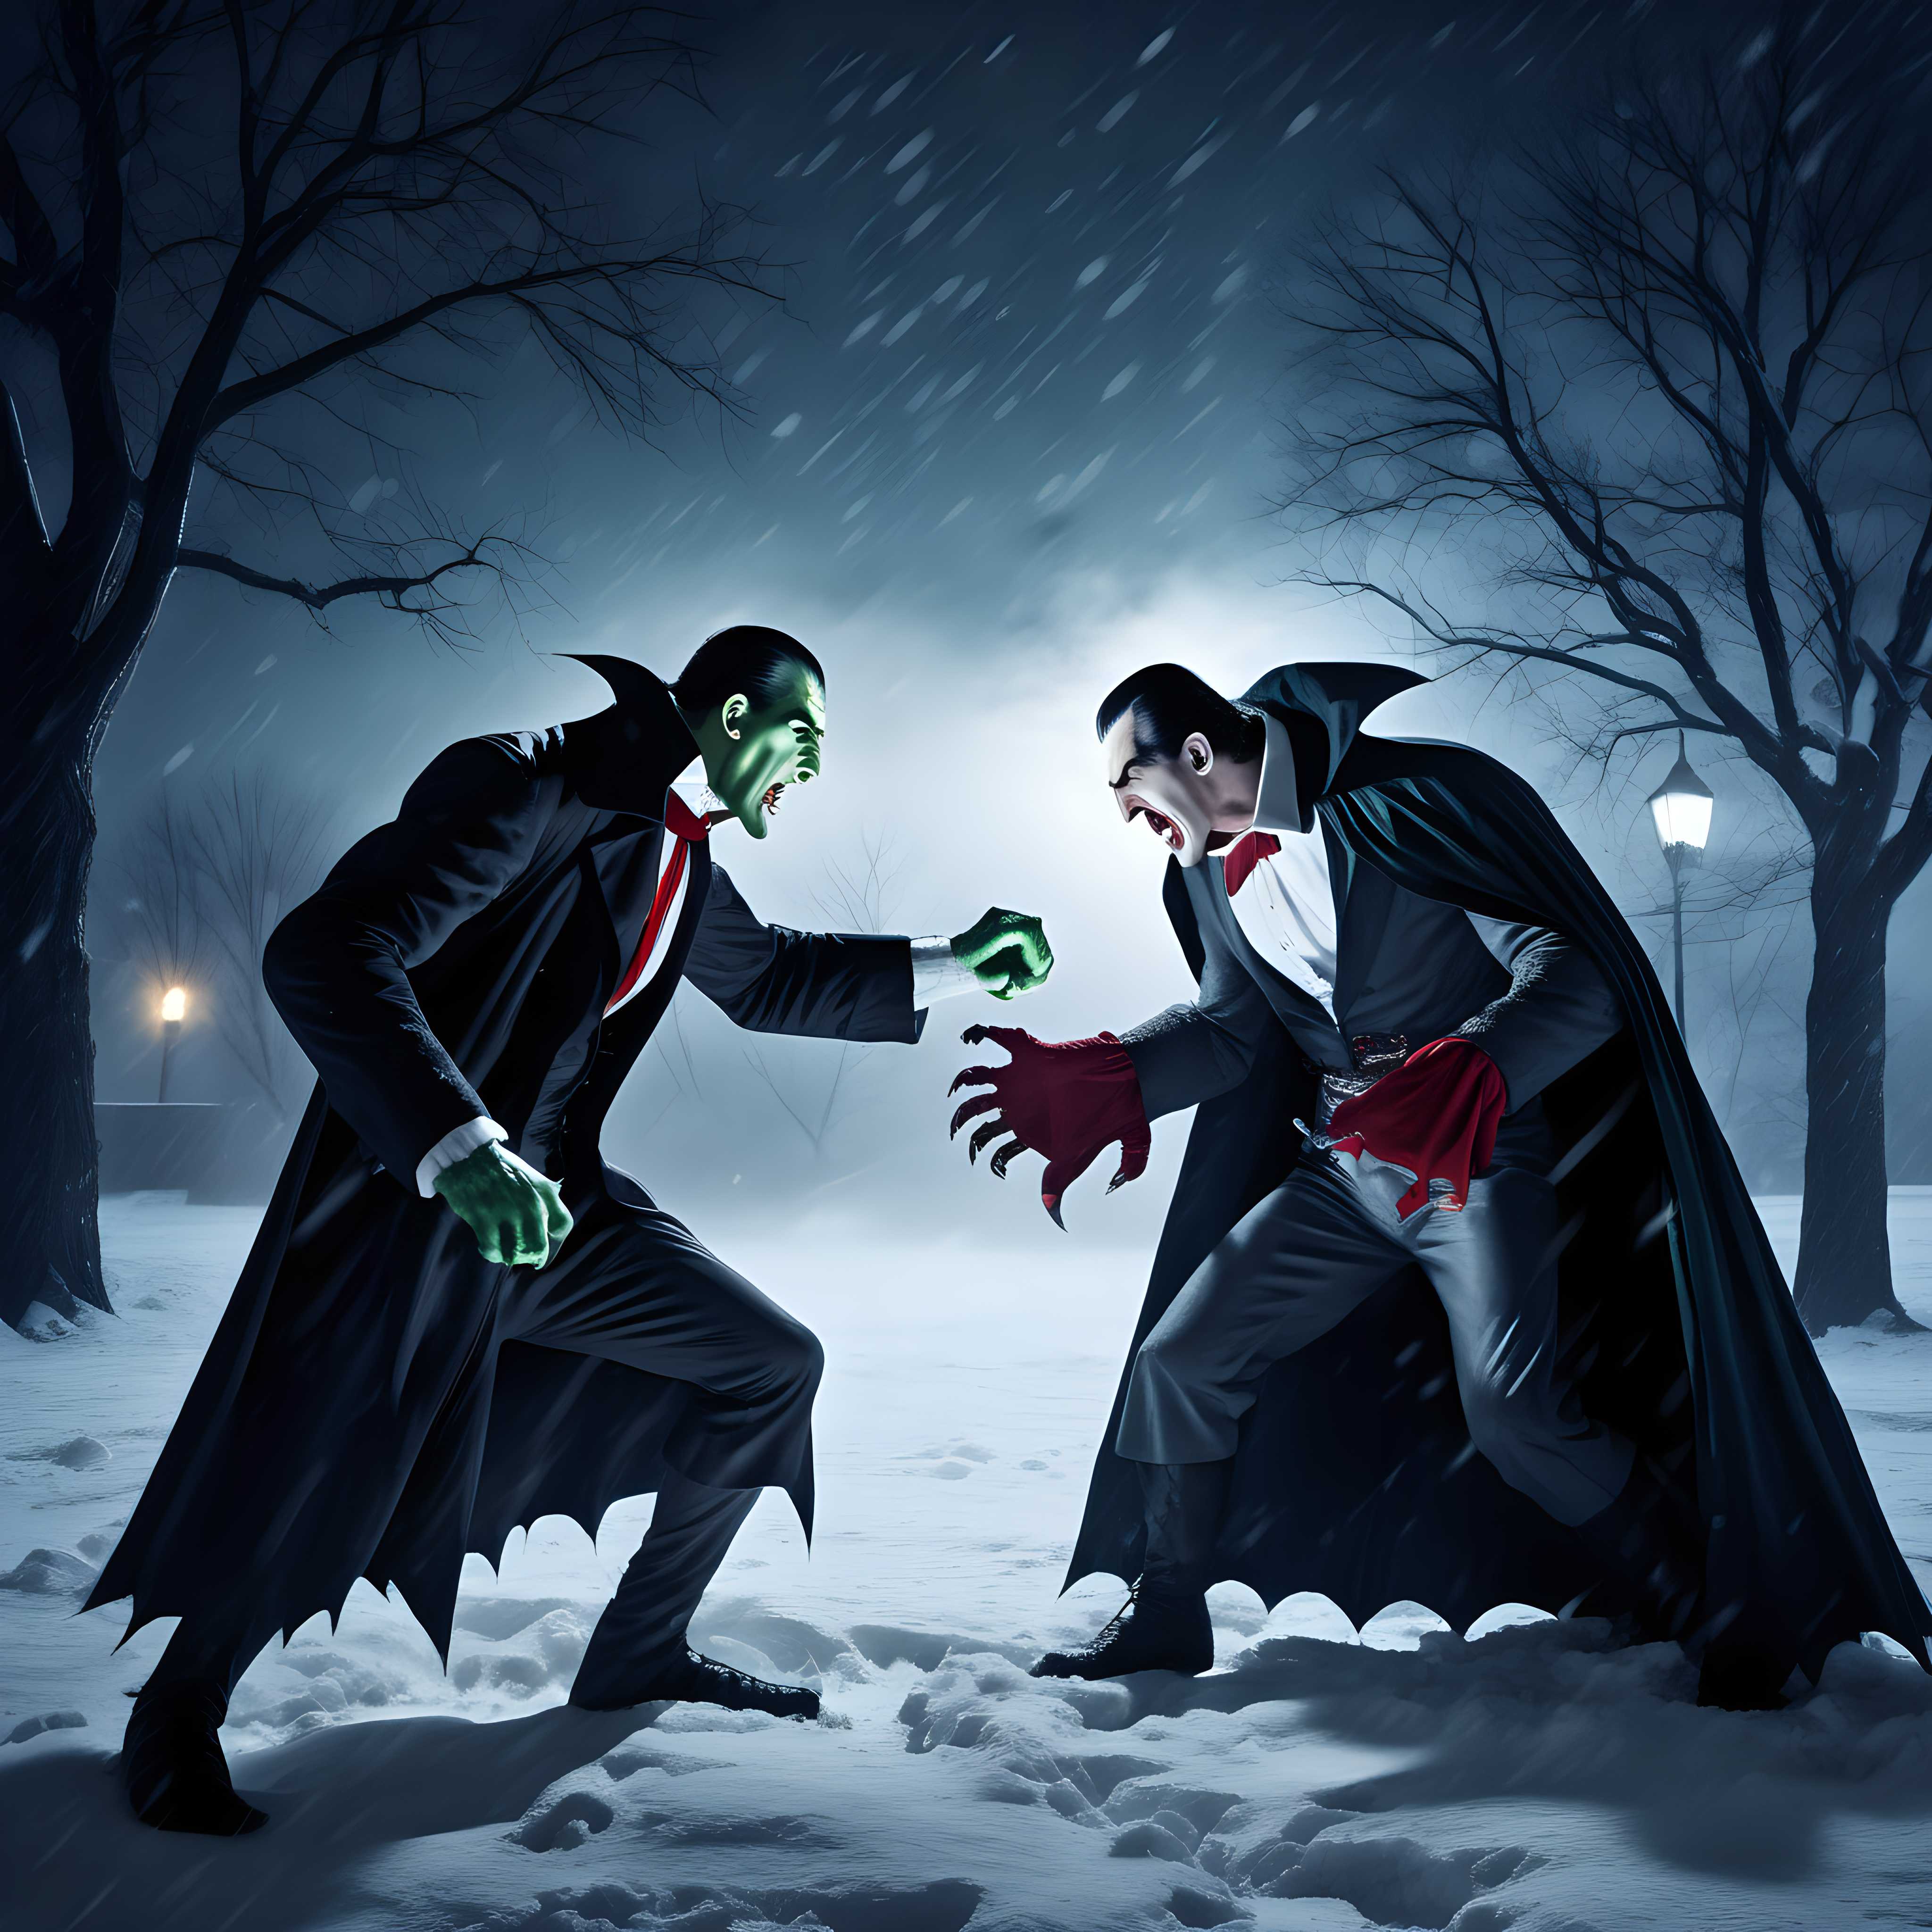 Dracula fighting Frankenstein Monster in winter snow storm